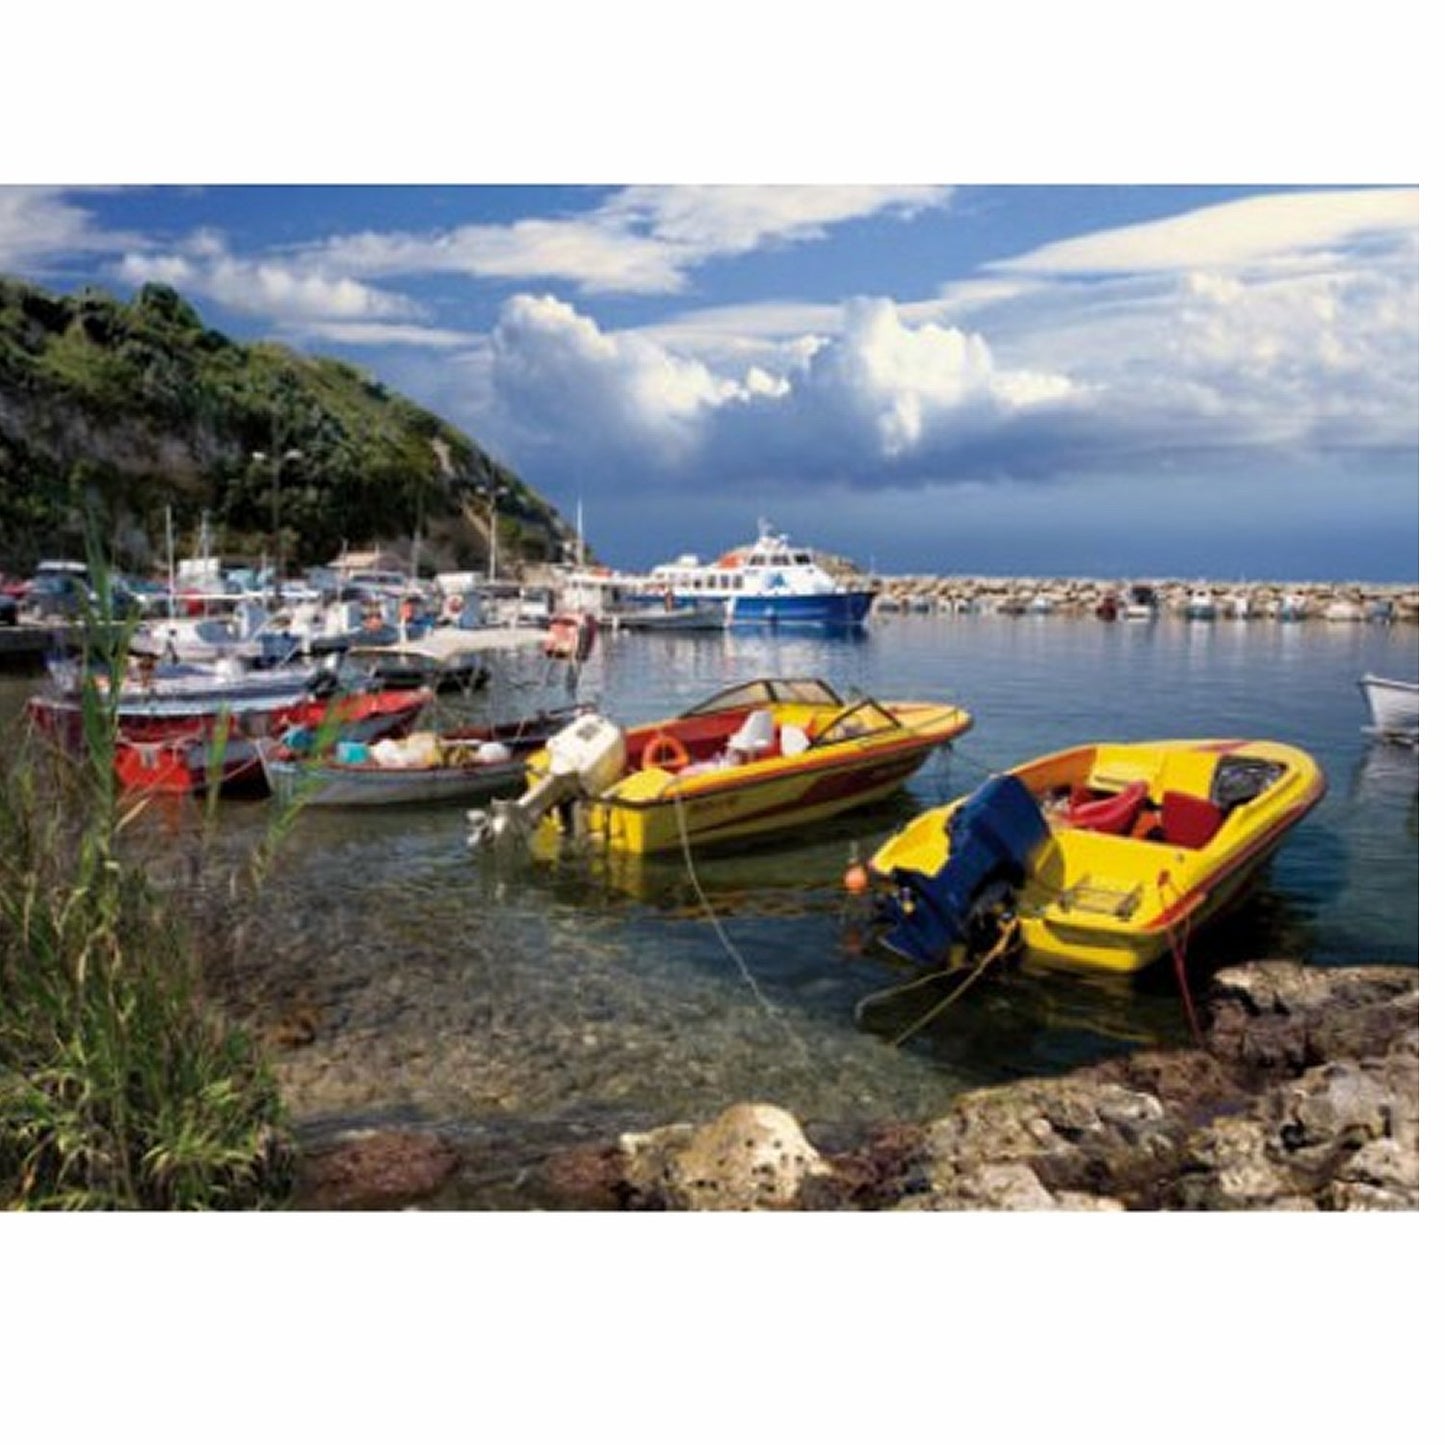 Dtoys - Discovering Europe : Corfu, Greece - 1000 Piece Jigsaw Puzzle